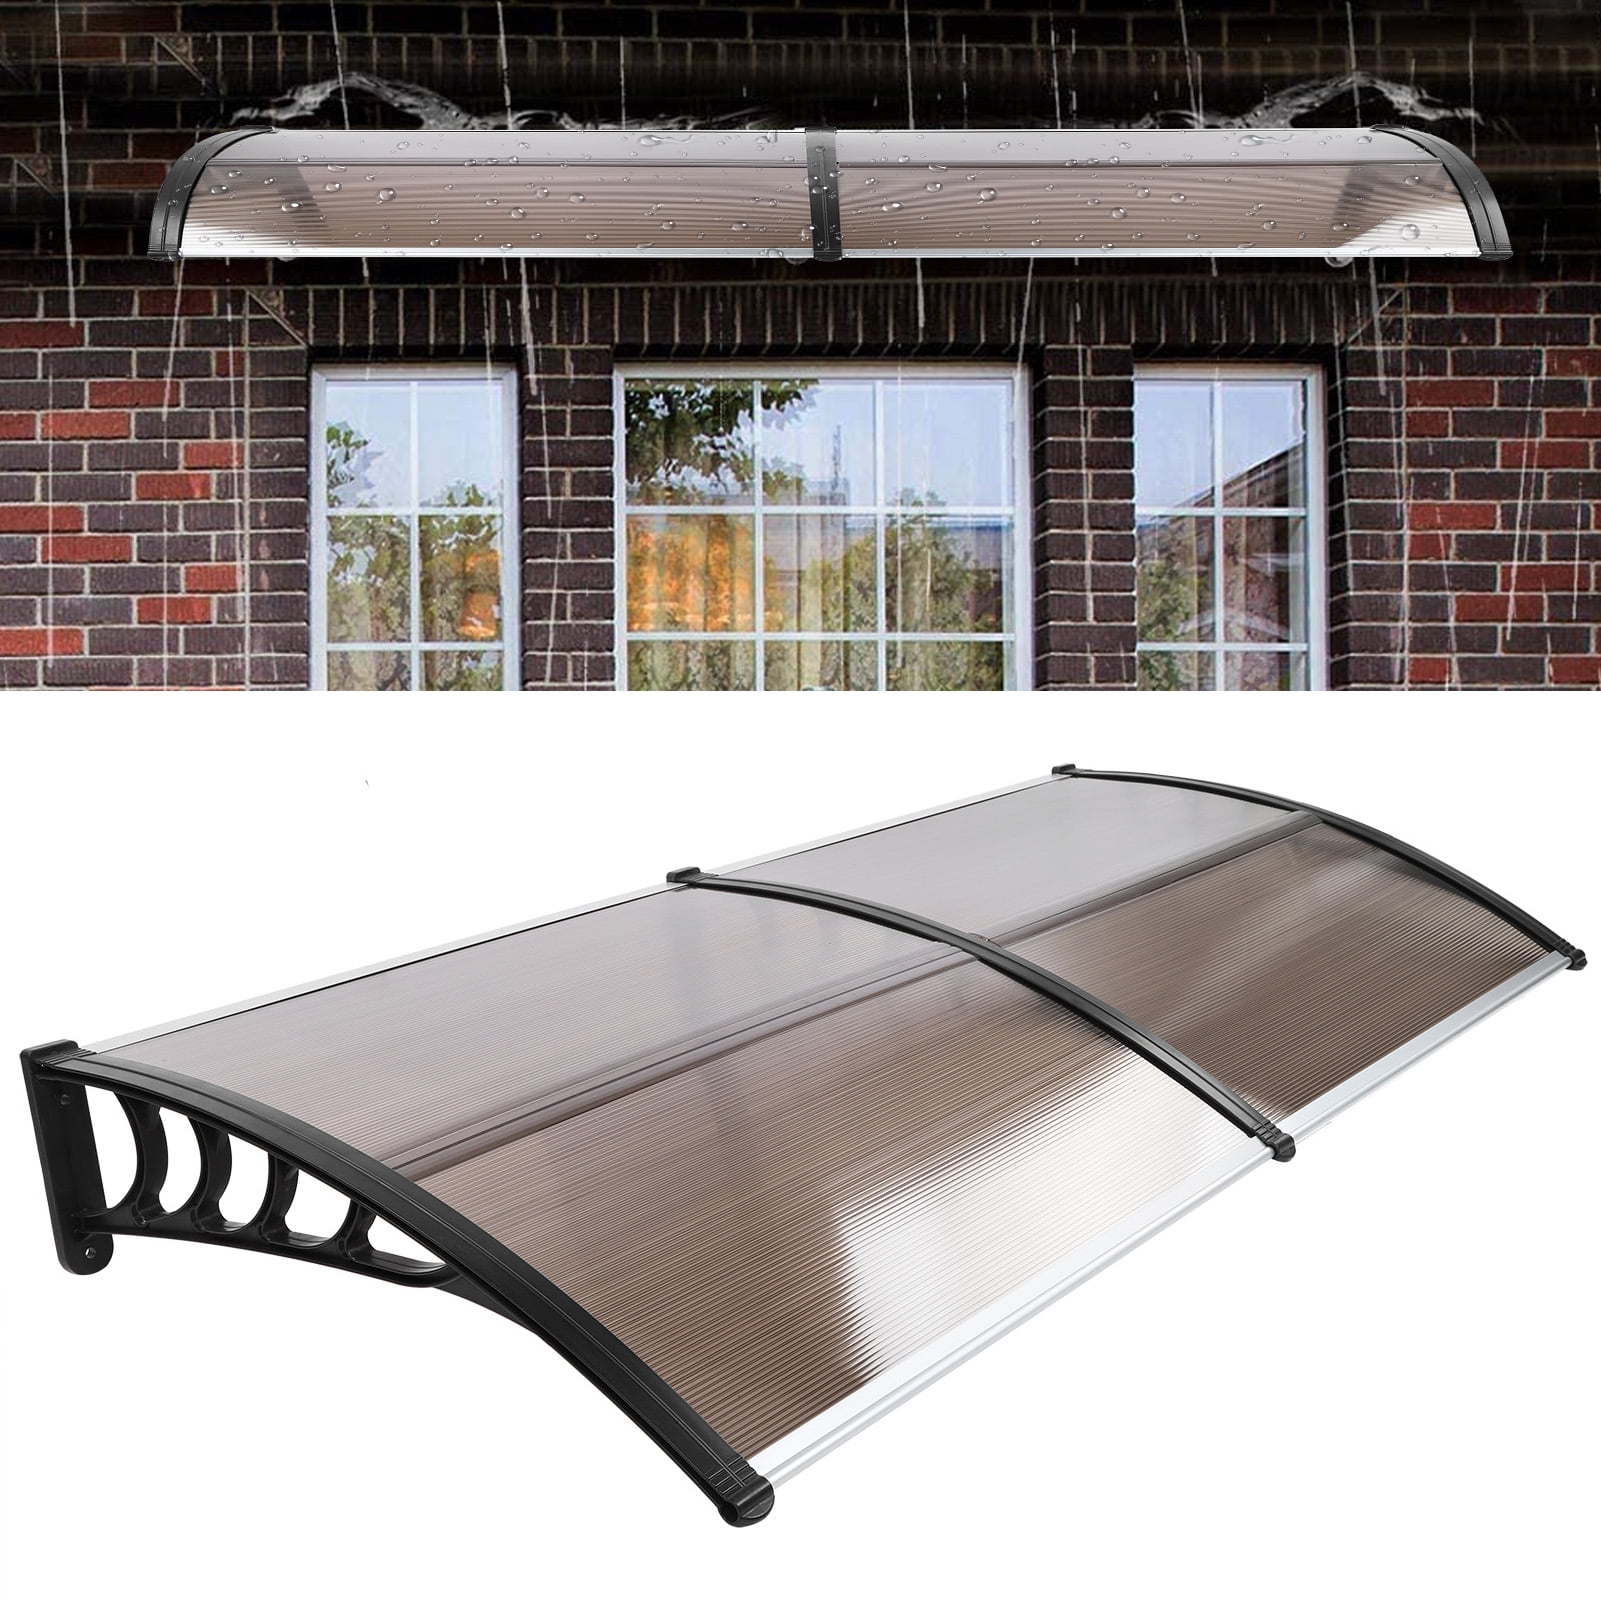 TOPINCN 1M1M Outdoor Window Door Awning Canopy Patio UV Rain Snow Sun Shield Cover Transparent Board Grey Support